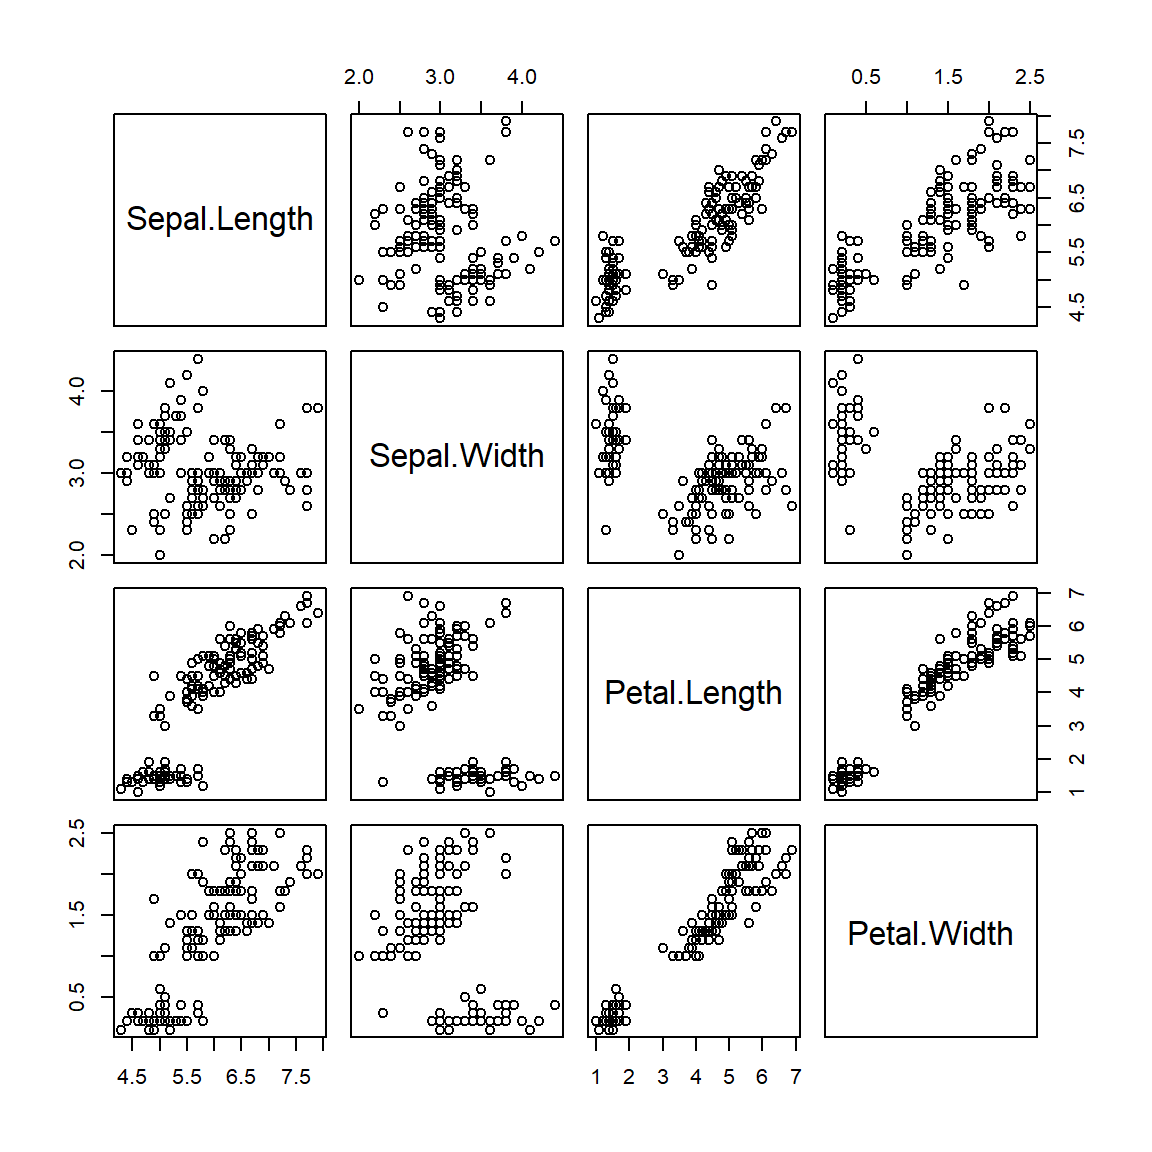 Pairwise scatter plot of iris data set